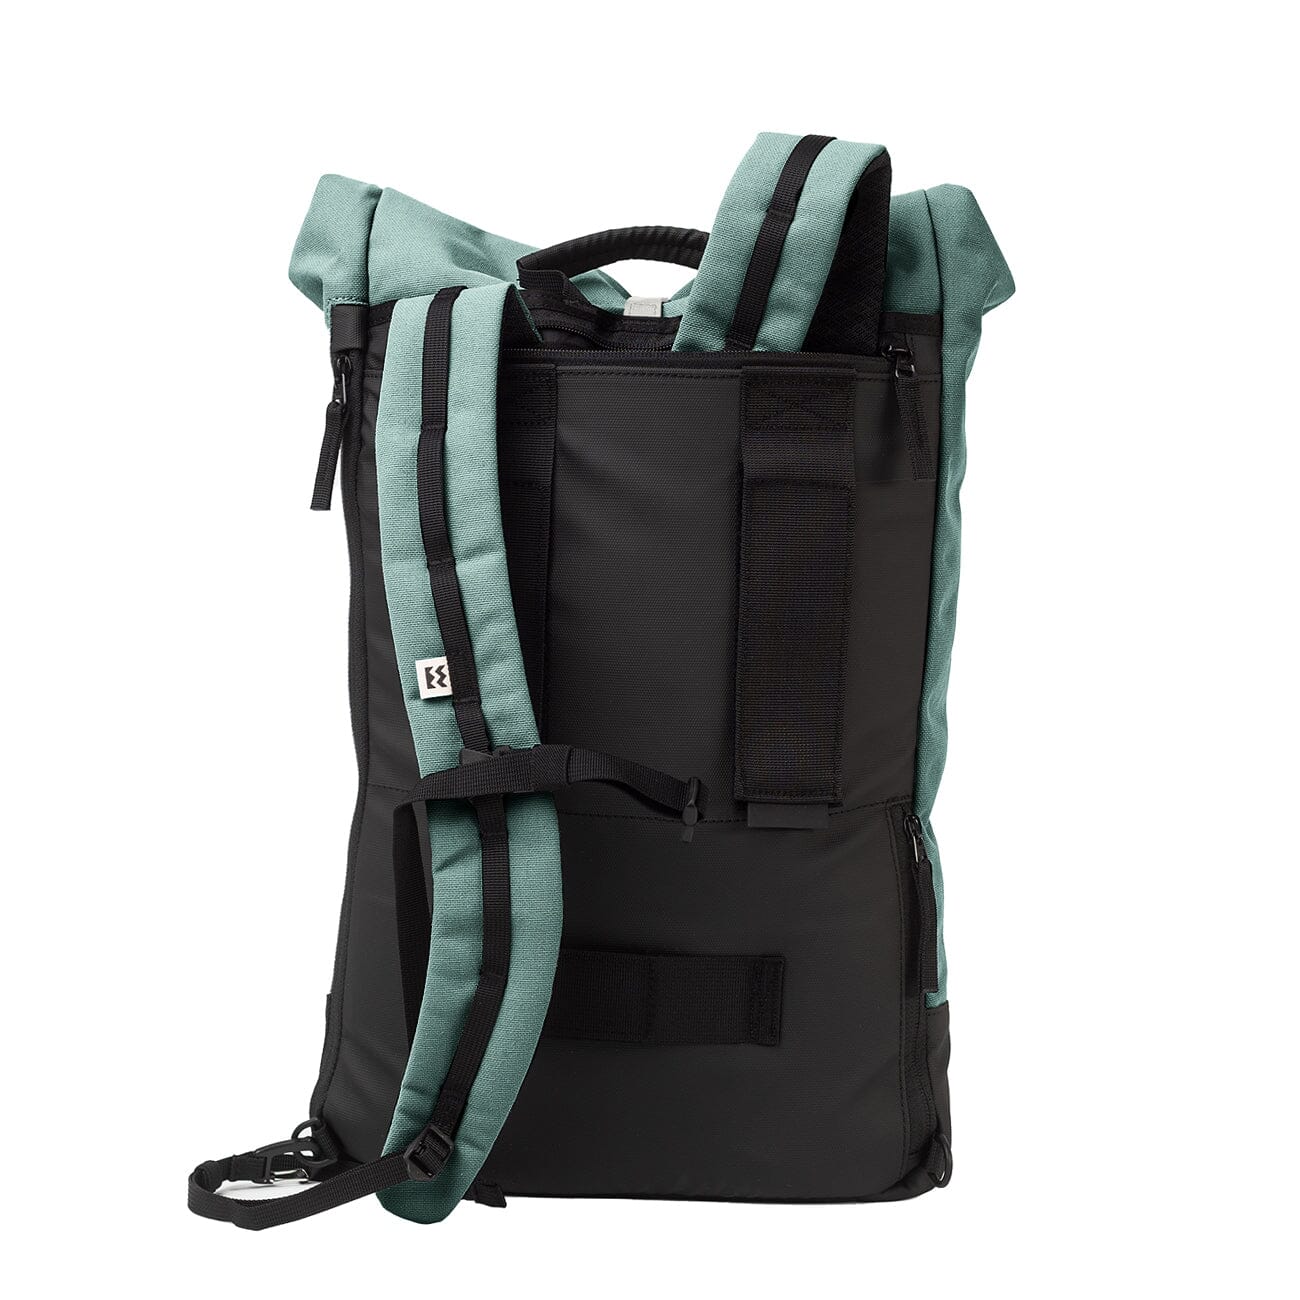 light blue eco friendly backpack mero mero breathable mesh back pannel adjustable shoulder straps back view